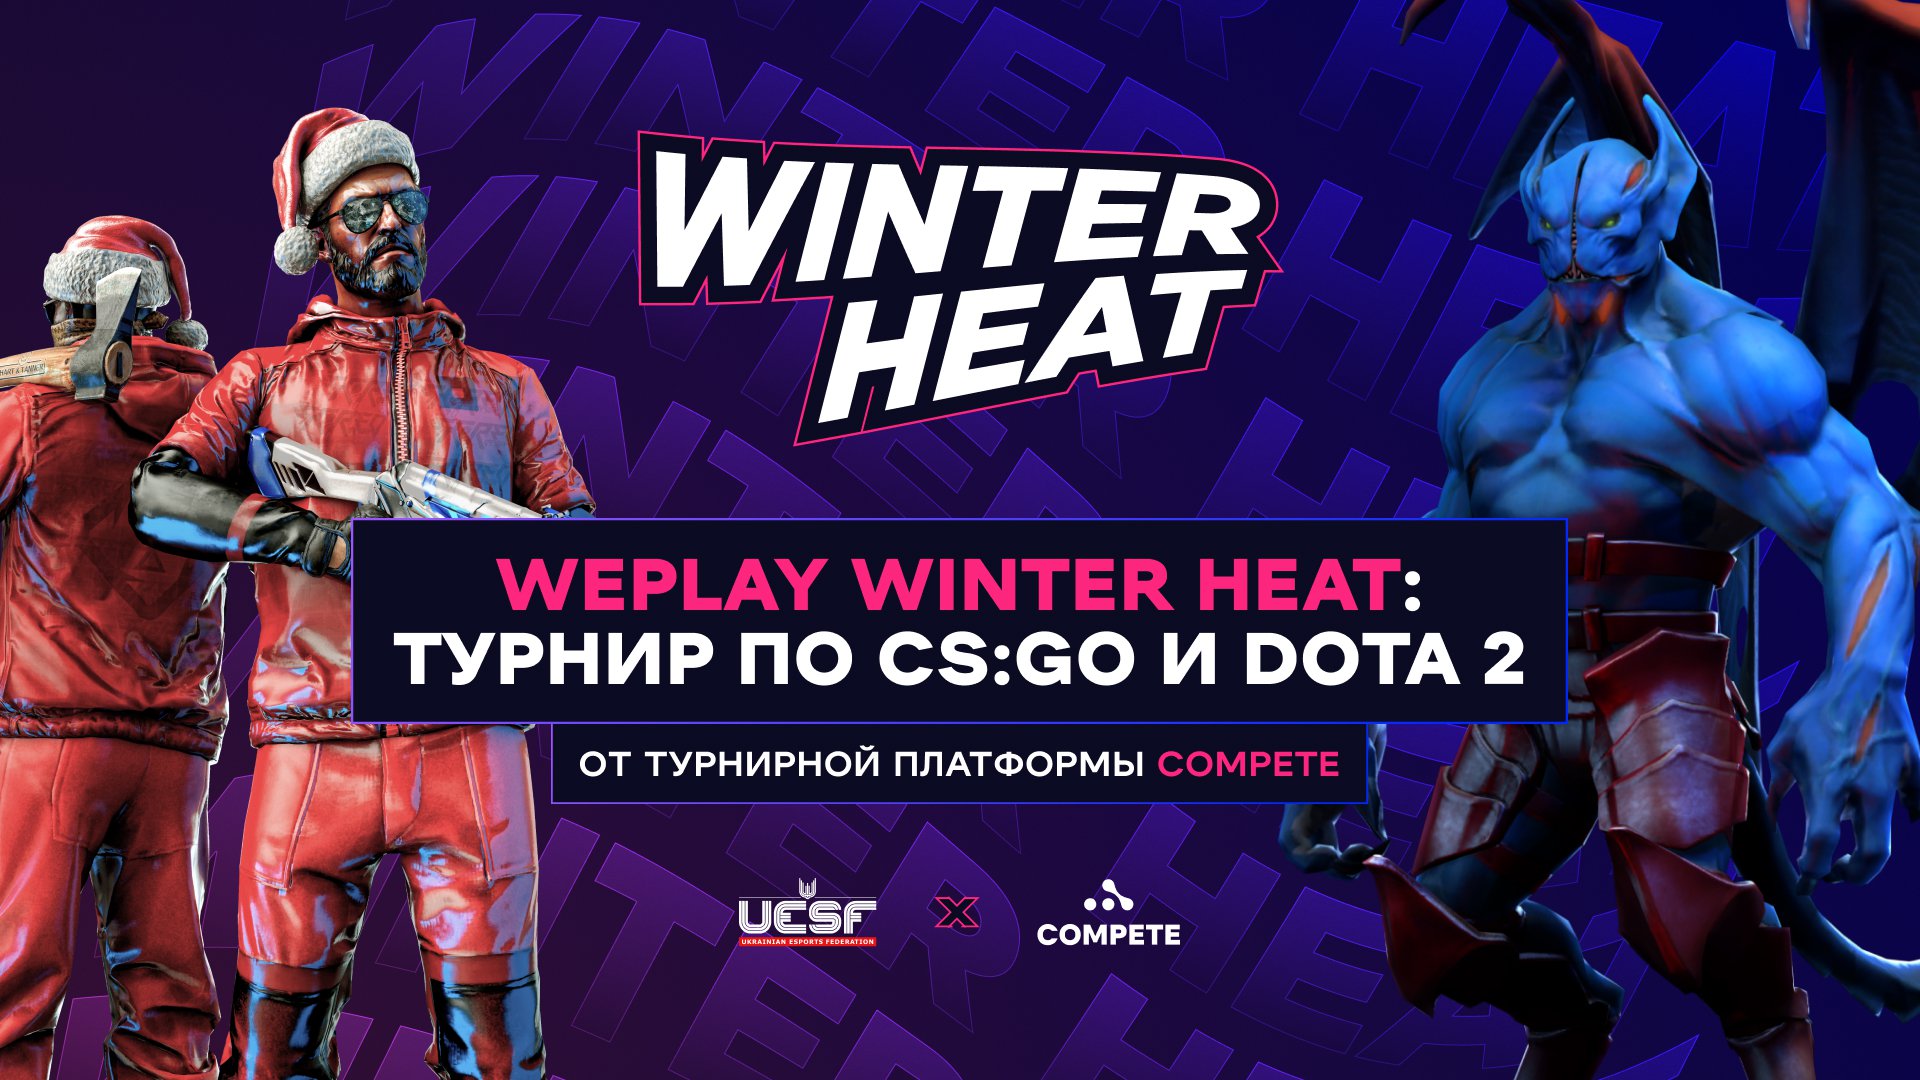 WePlay Winter Heat: турнир по CS:GO и Dota 2 от турнирной платформы Compete. Изображение: WePlay Holding